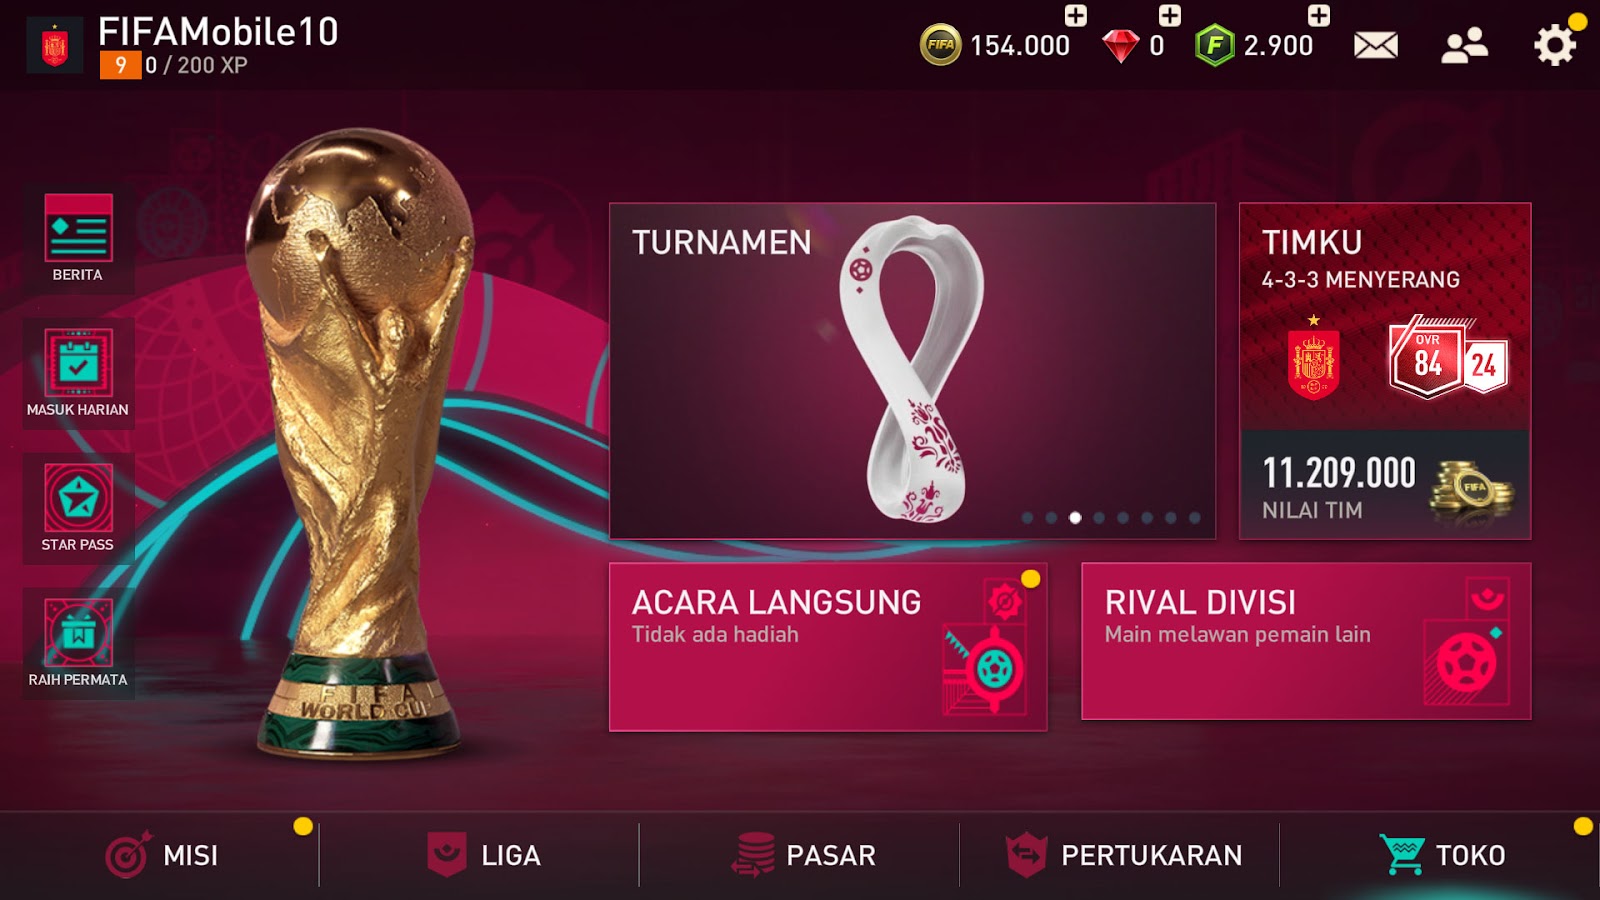 FIFA WORLD CUP™ 2022